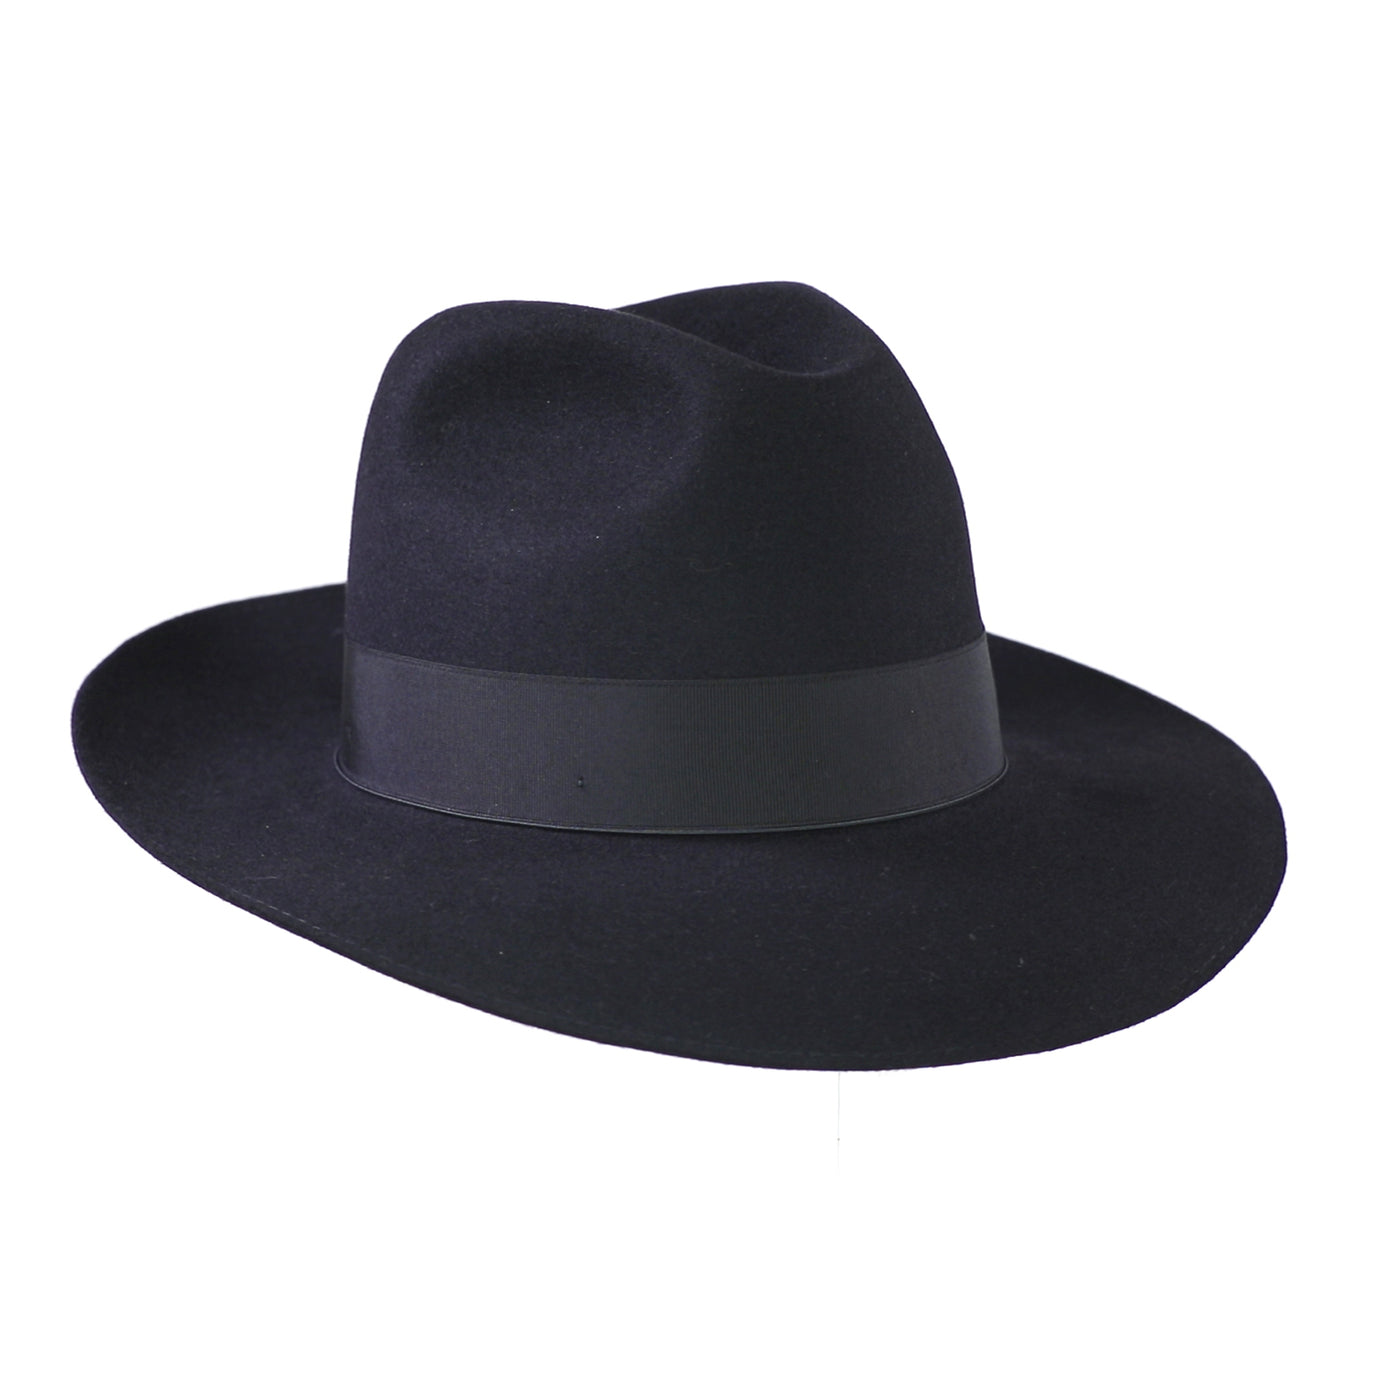 Trento 300, product_type] - Borsalino for Atica fedora hat